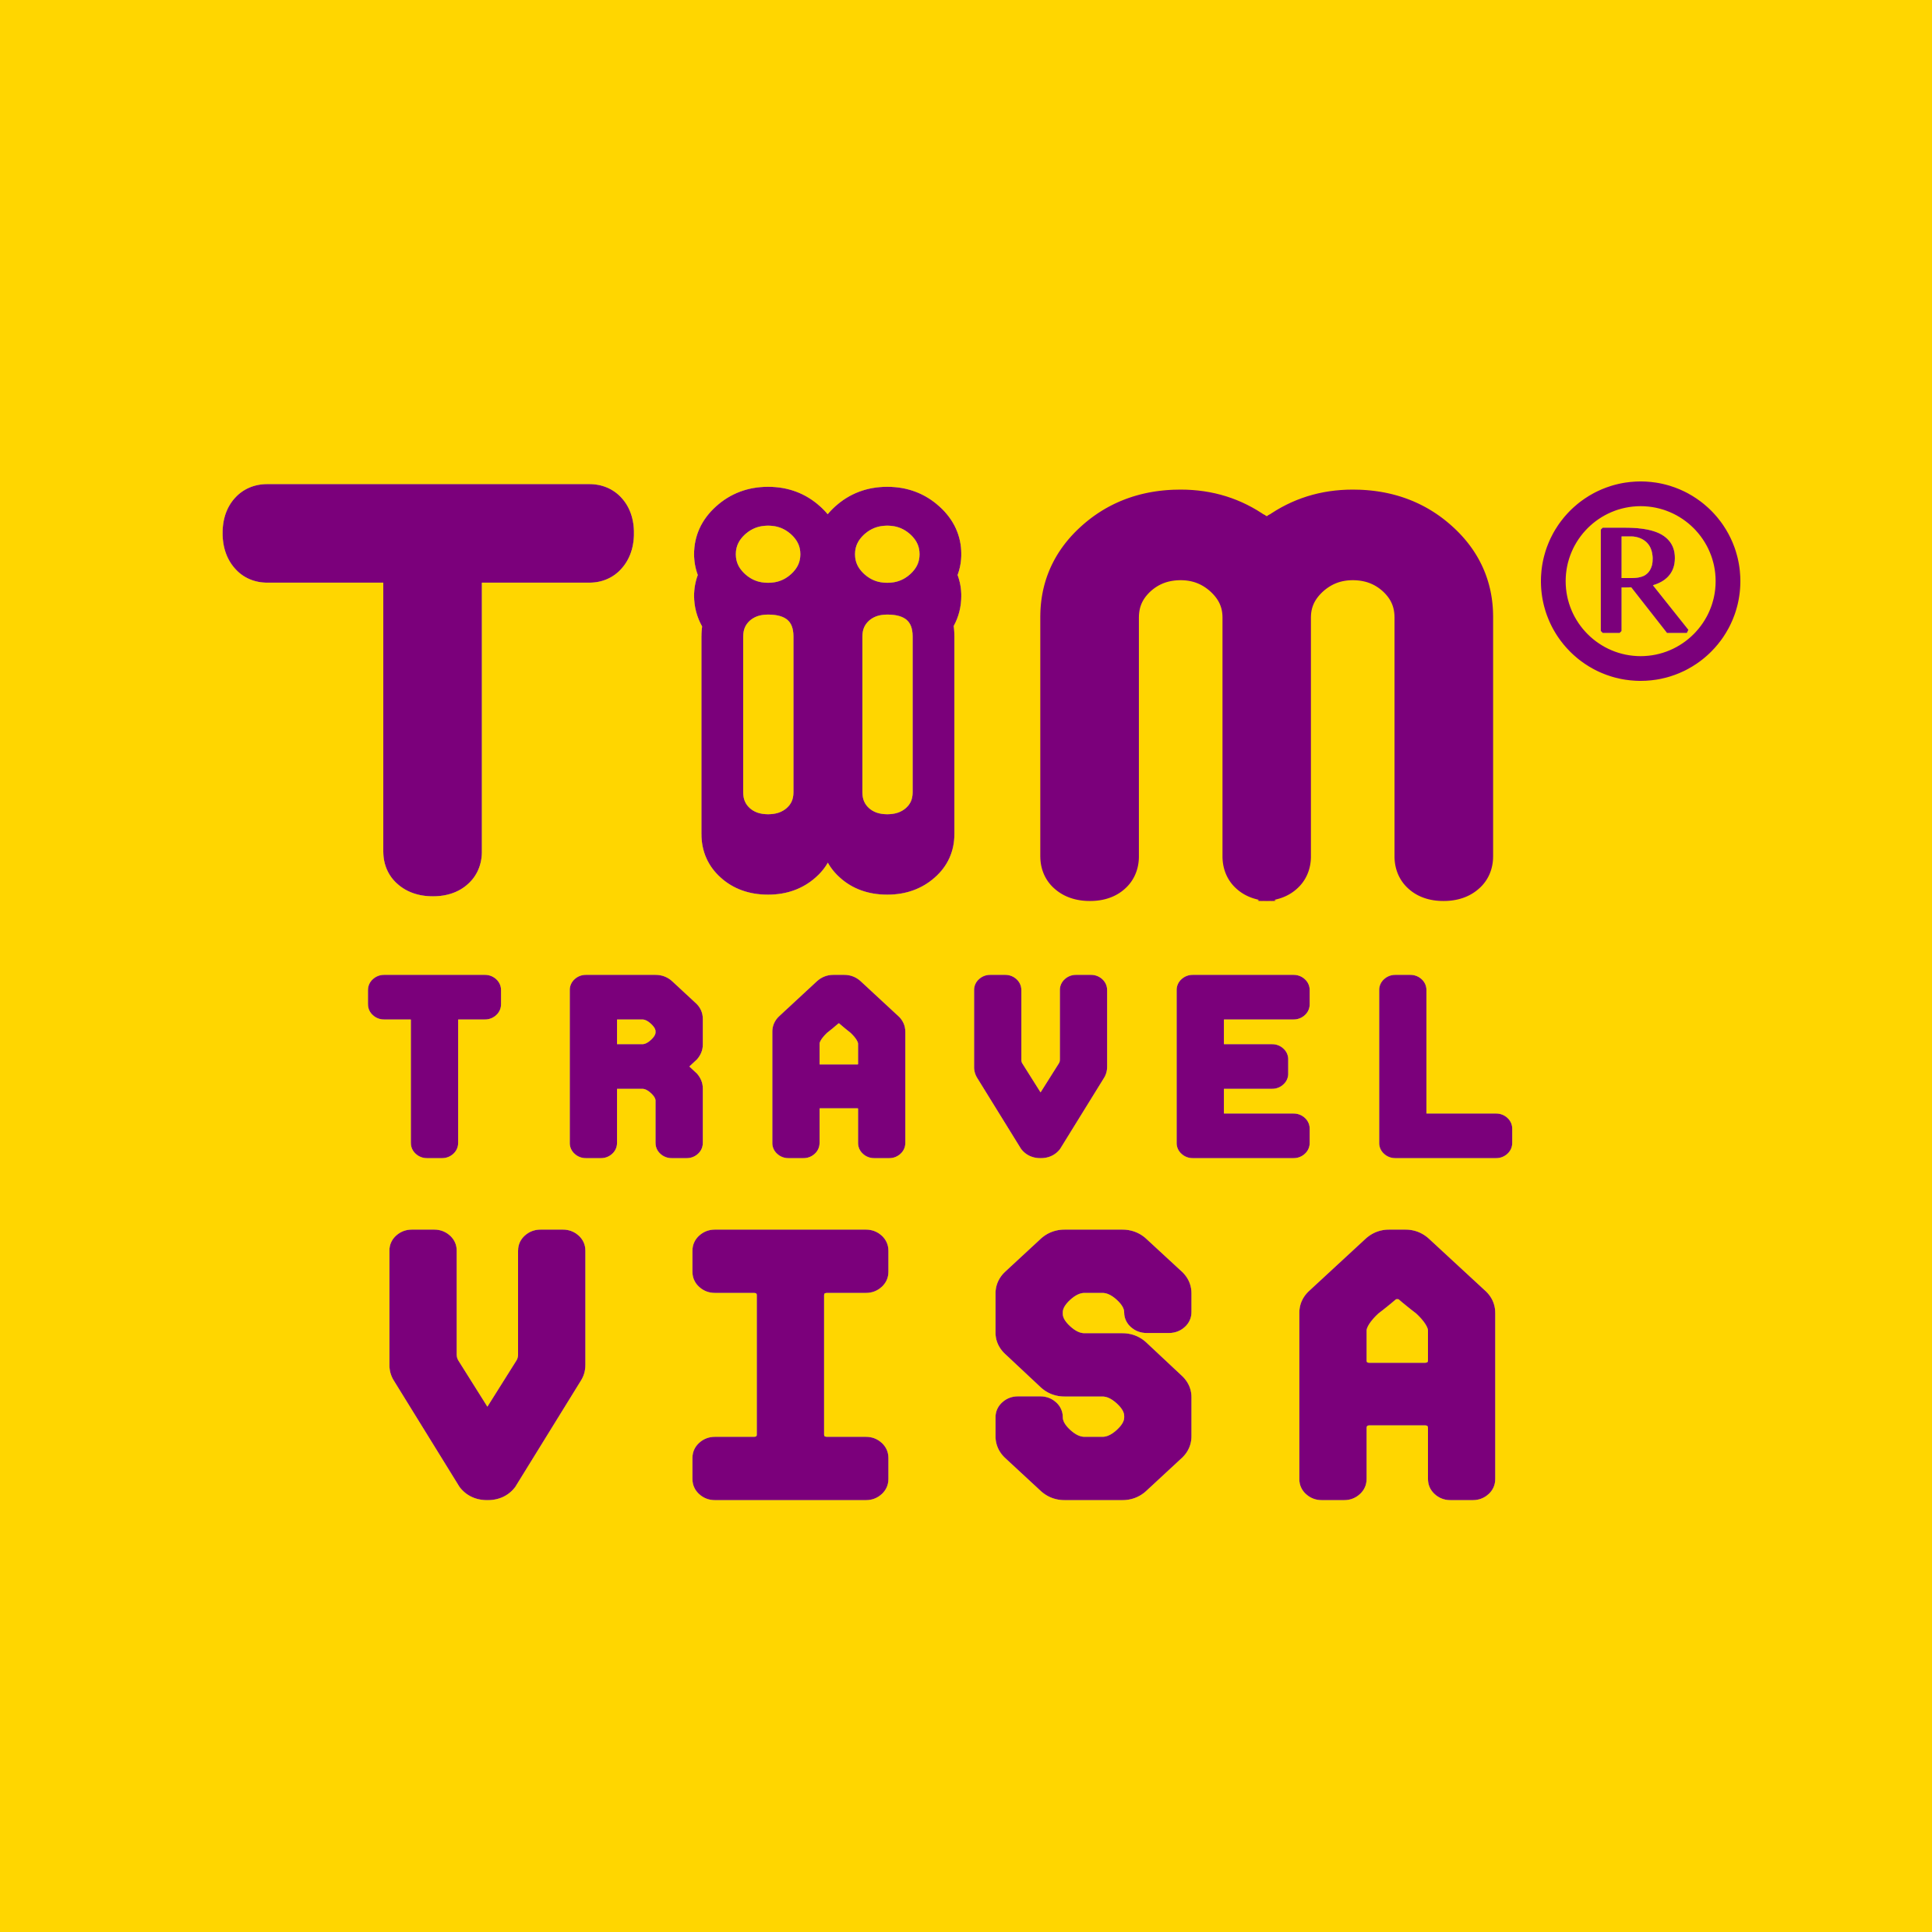 Tiim Travel Co, Ltd.